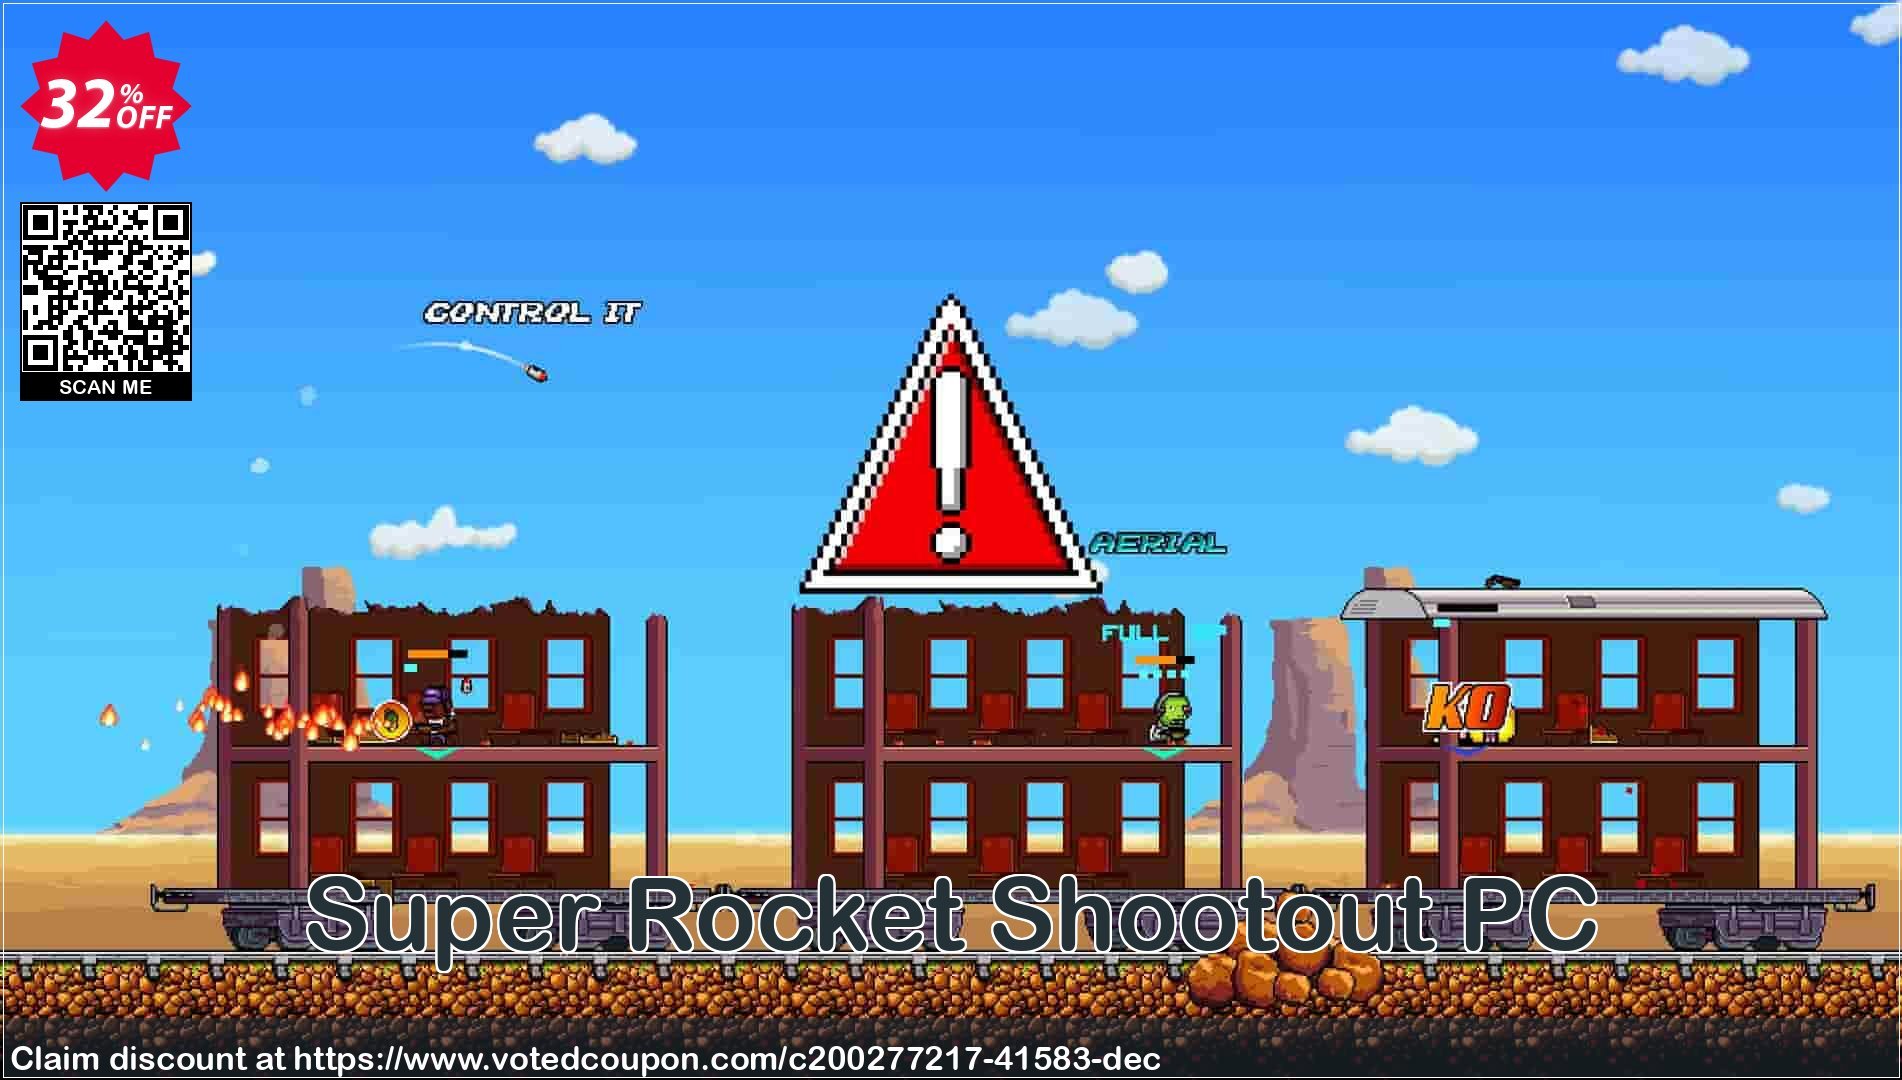 Super Rocket Shootout PC Coupon Code May 2024, 32% OFF - VotedCoupon